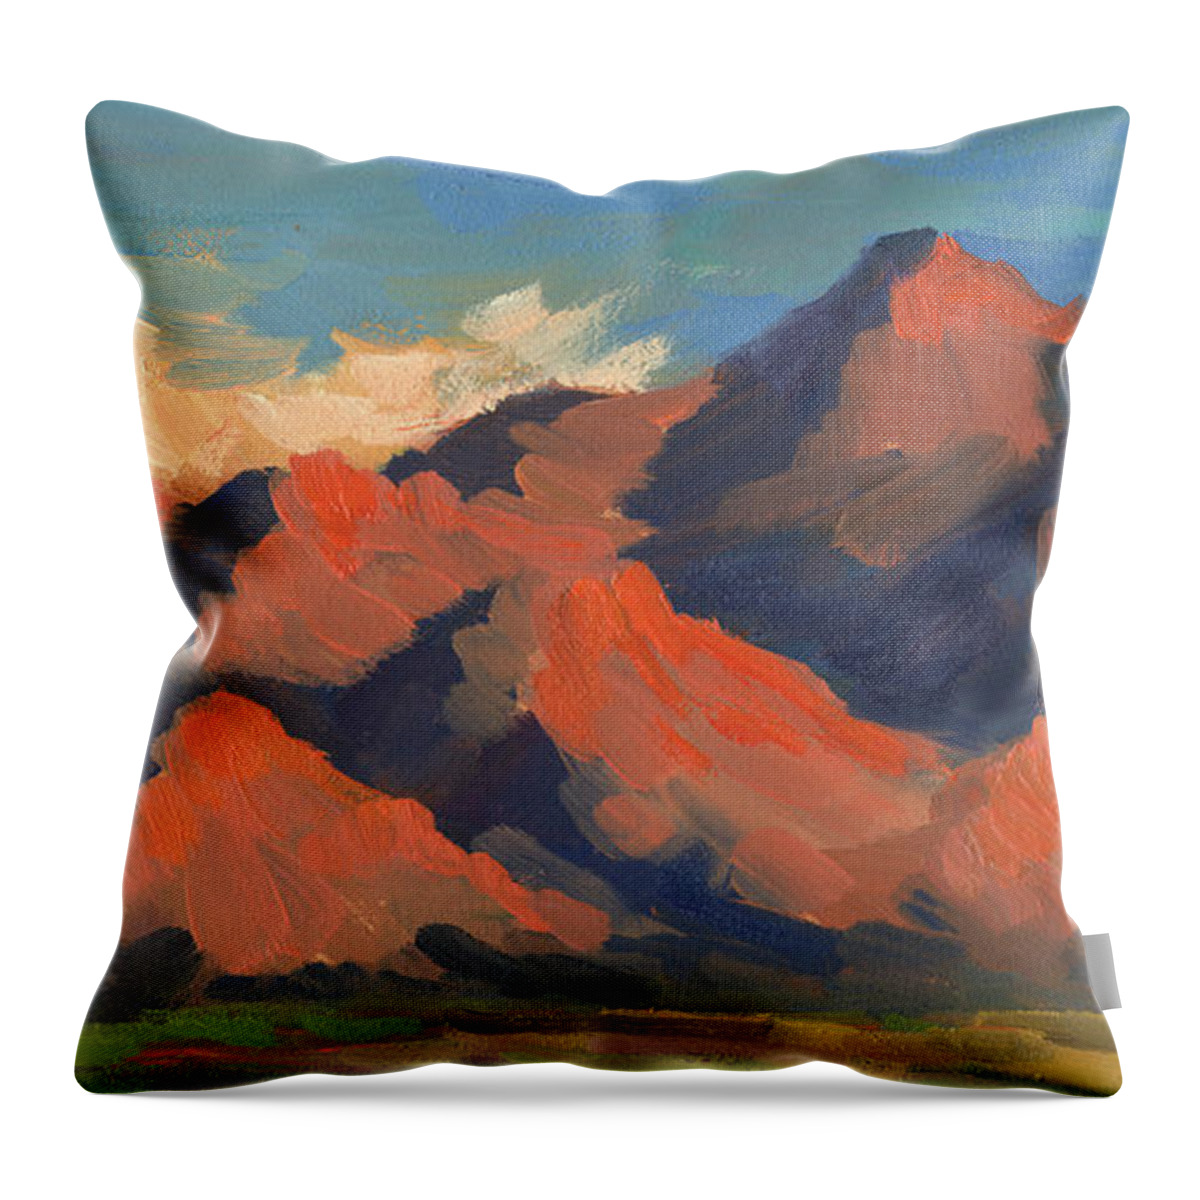 La Quinta Mountains Morning Throw Pillow featuring the painting La Quinta Mountains Morning by Diane McClary